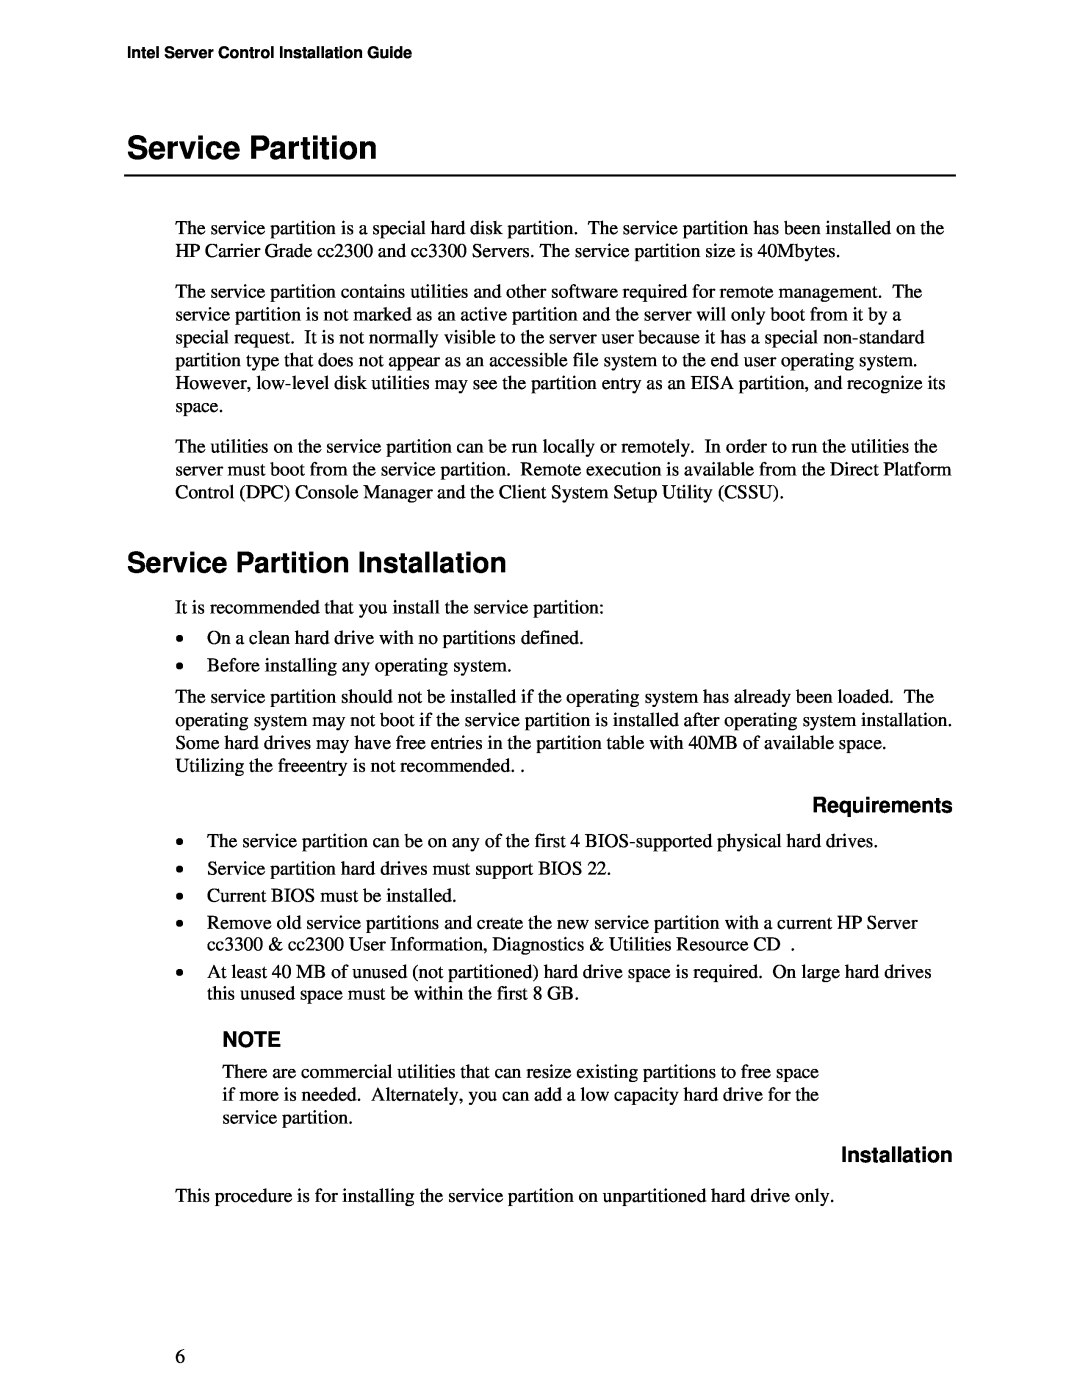 Intel cc3300, cc2300 manual Service Partition Installation 